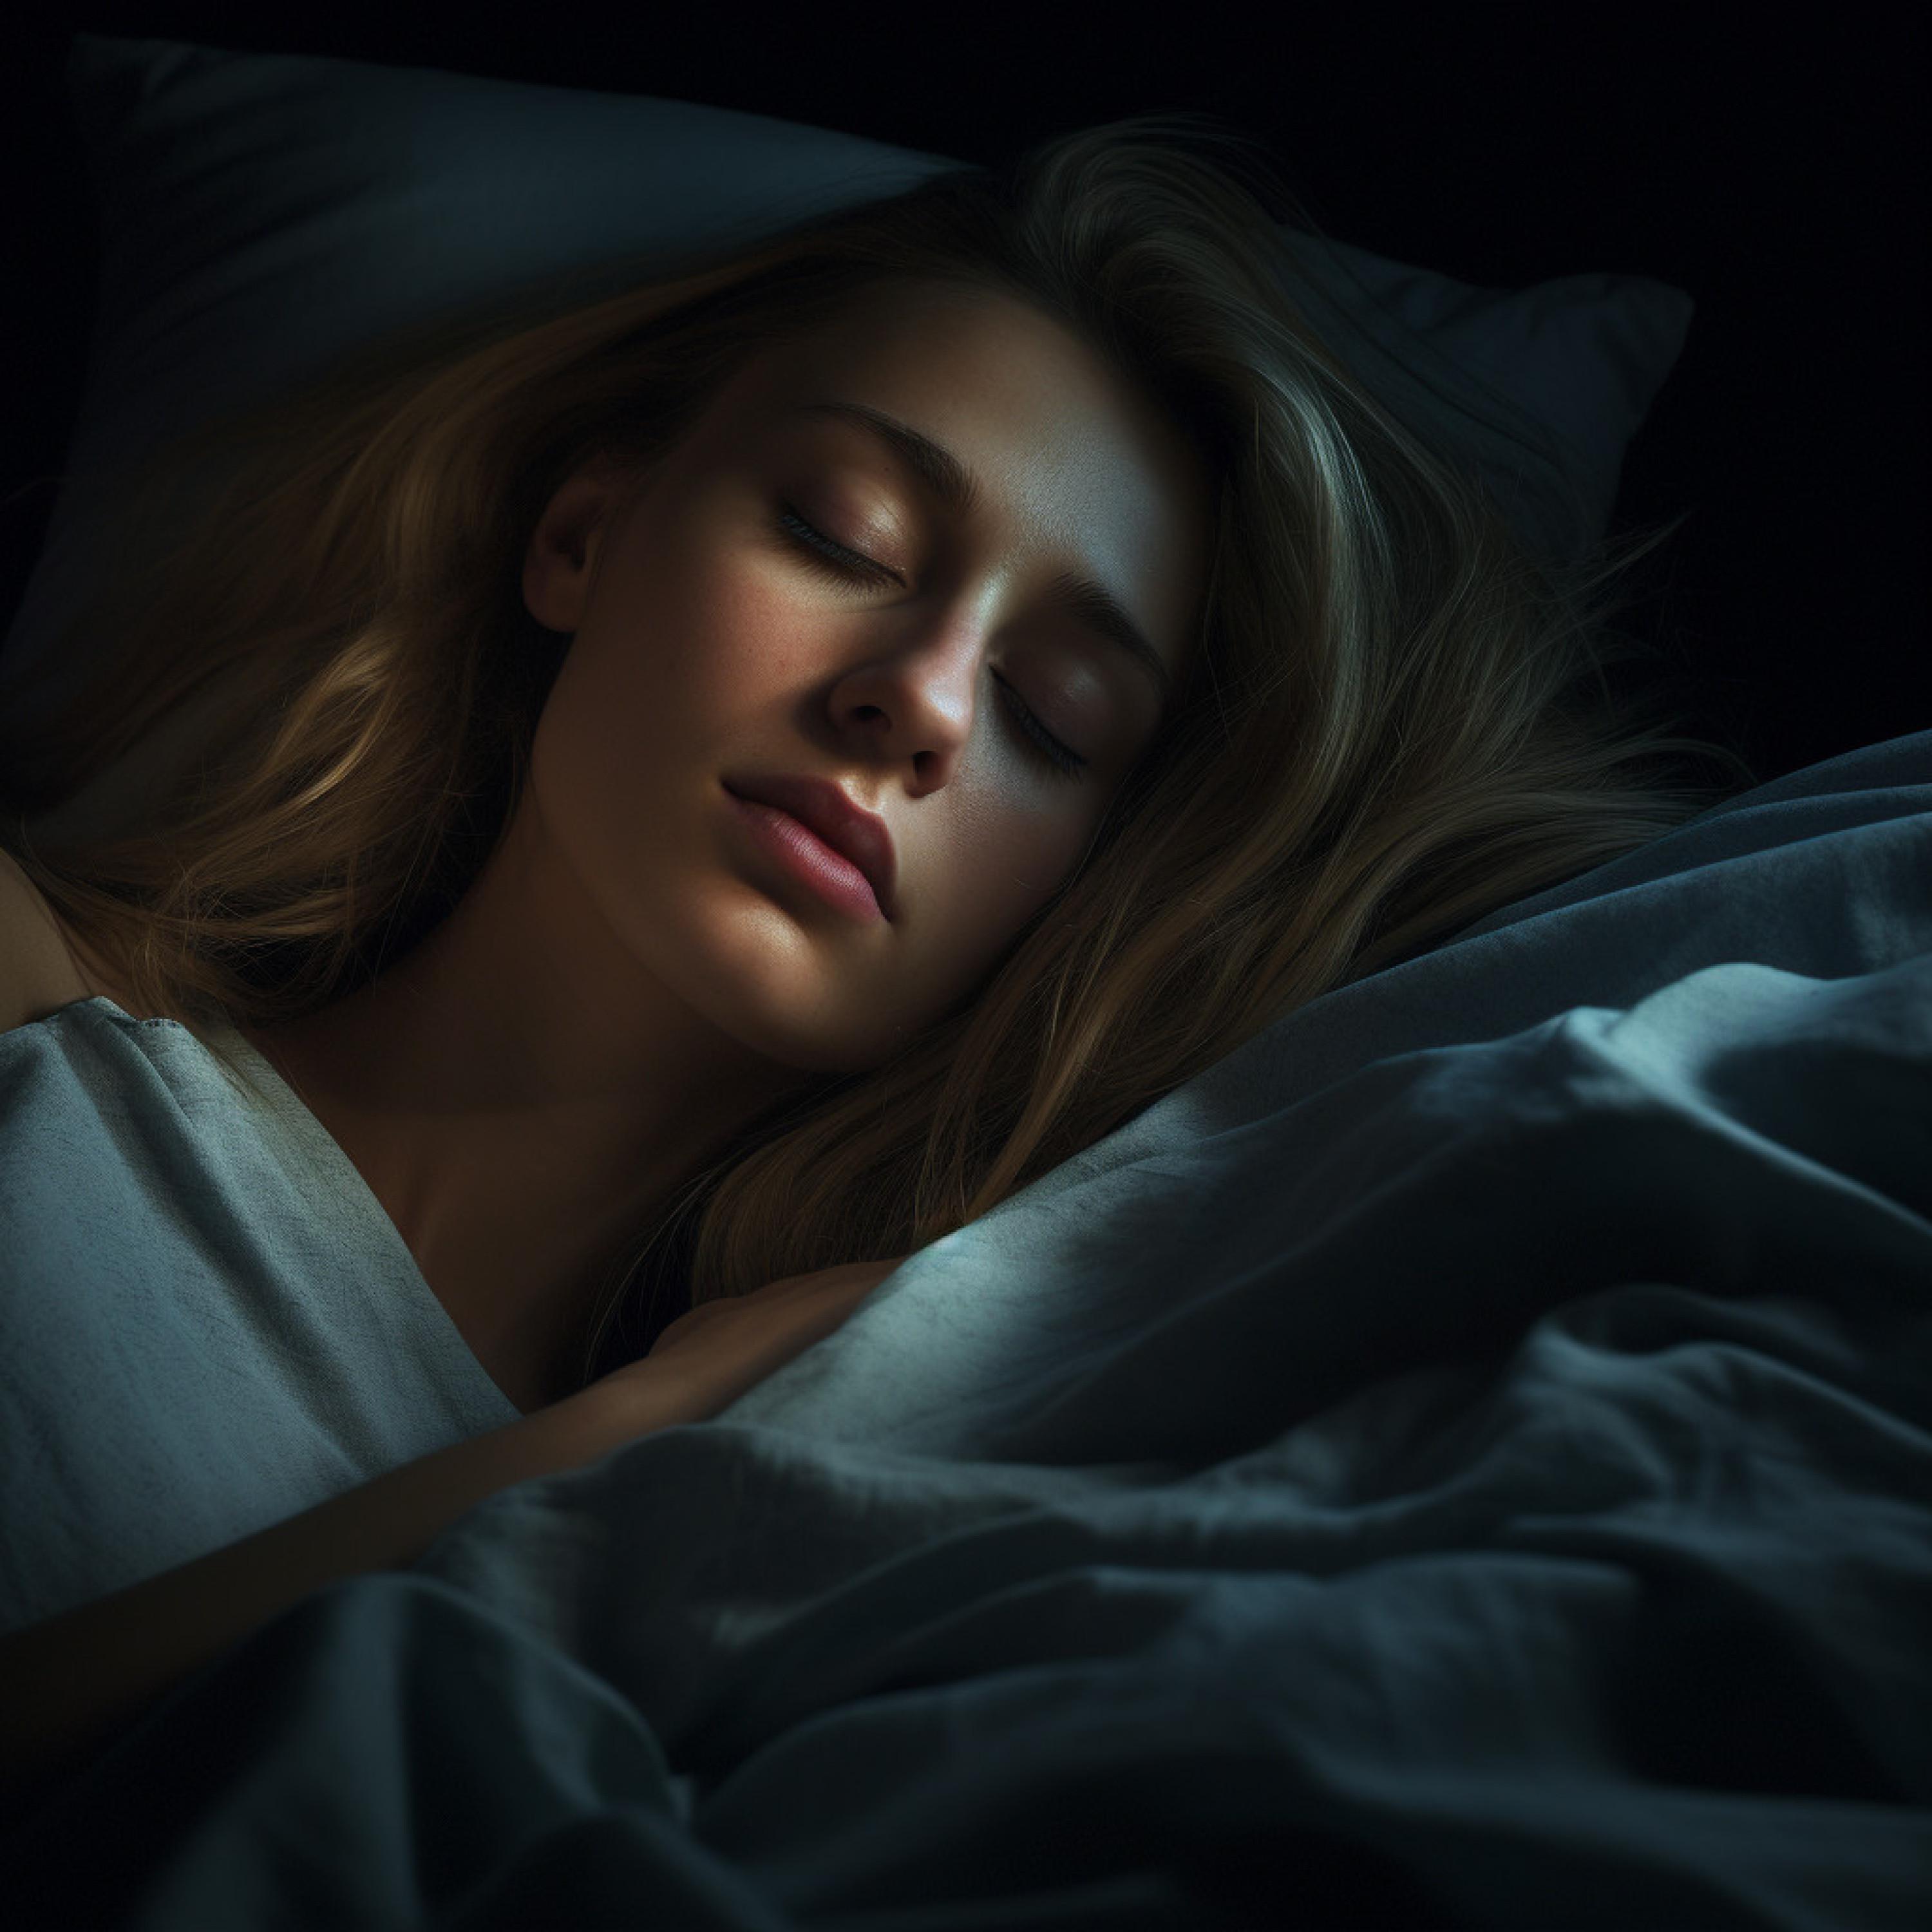 Sleepy Times - Gentle Lullaby in Night's Embrace